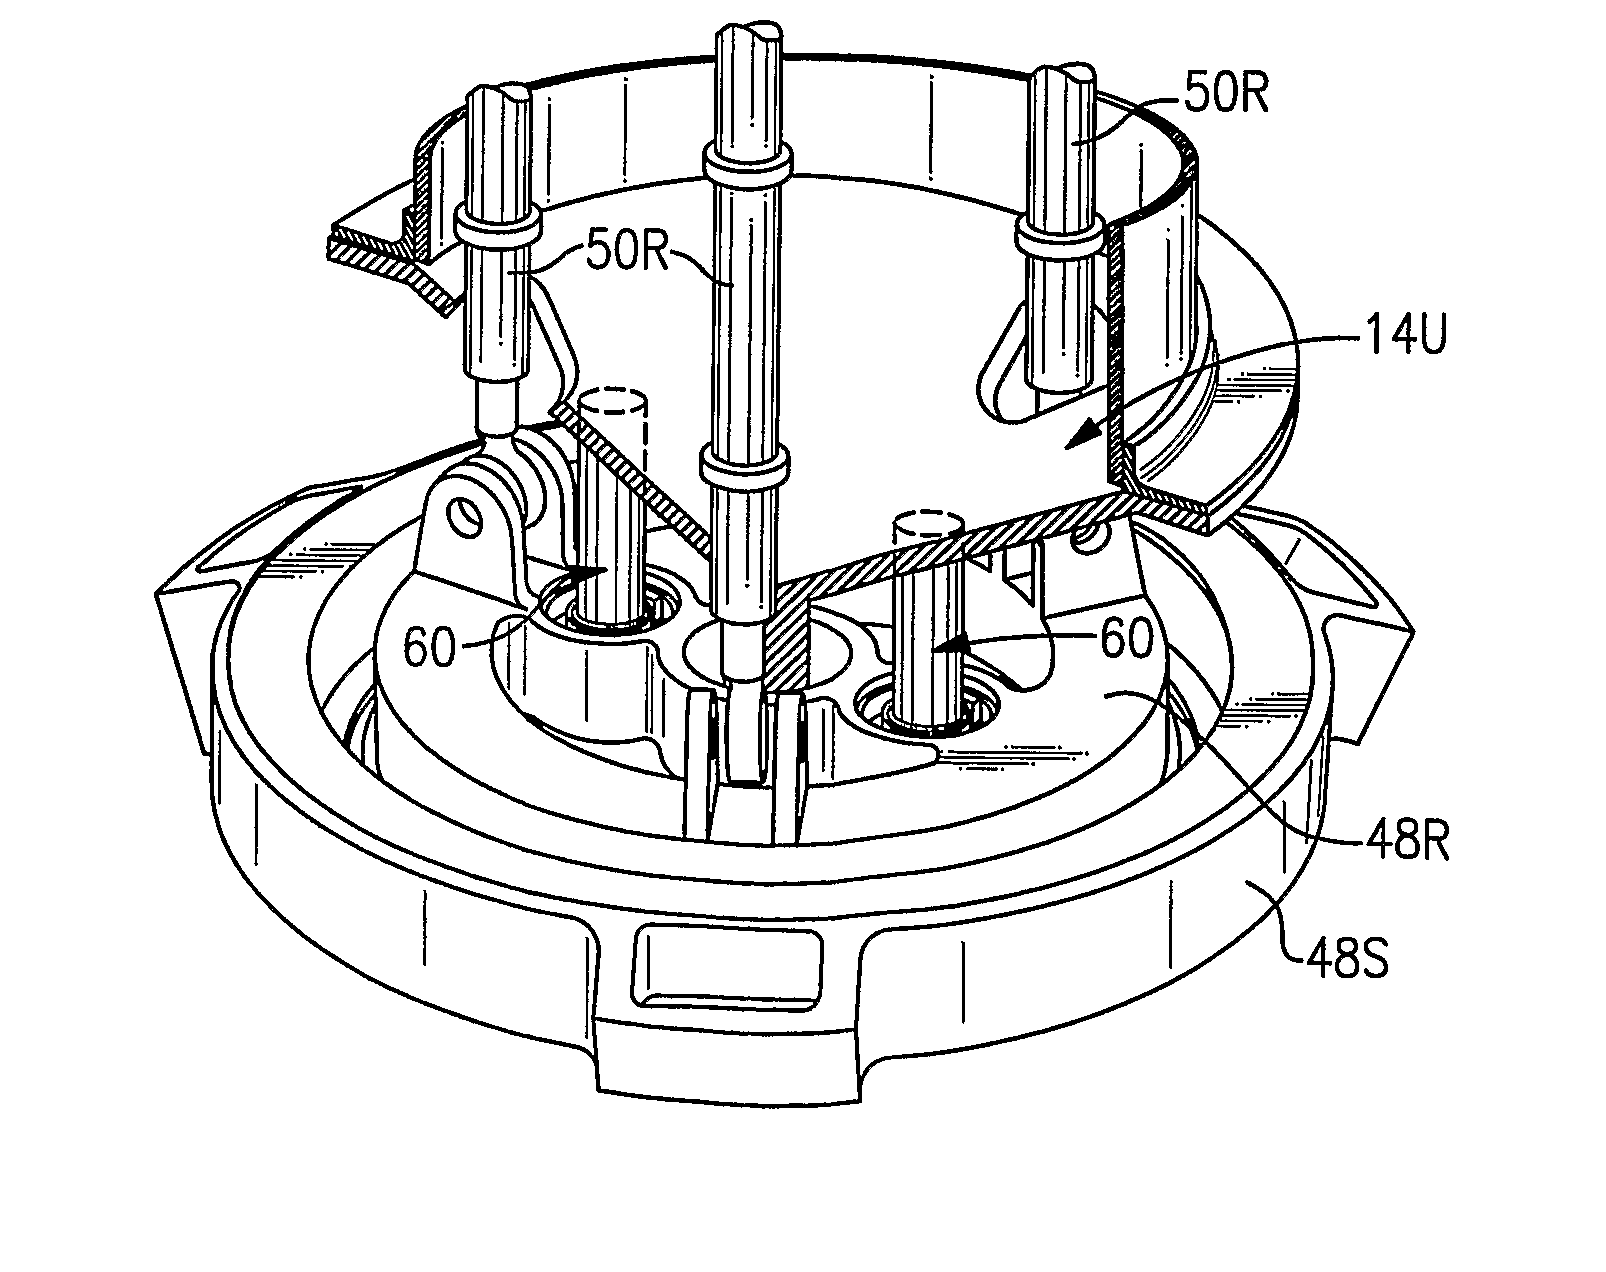 Swash plate anti-torque mechanism